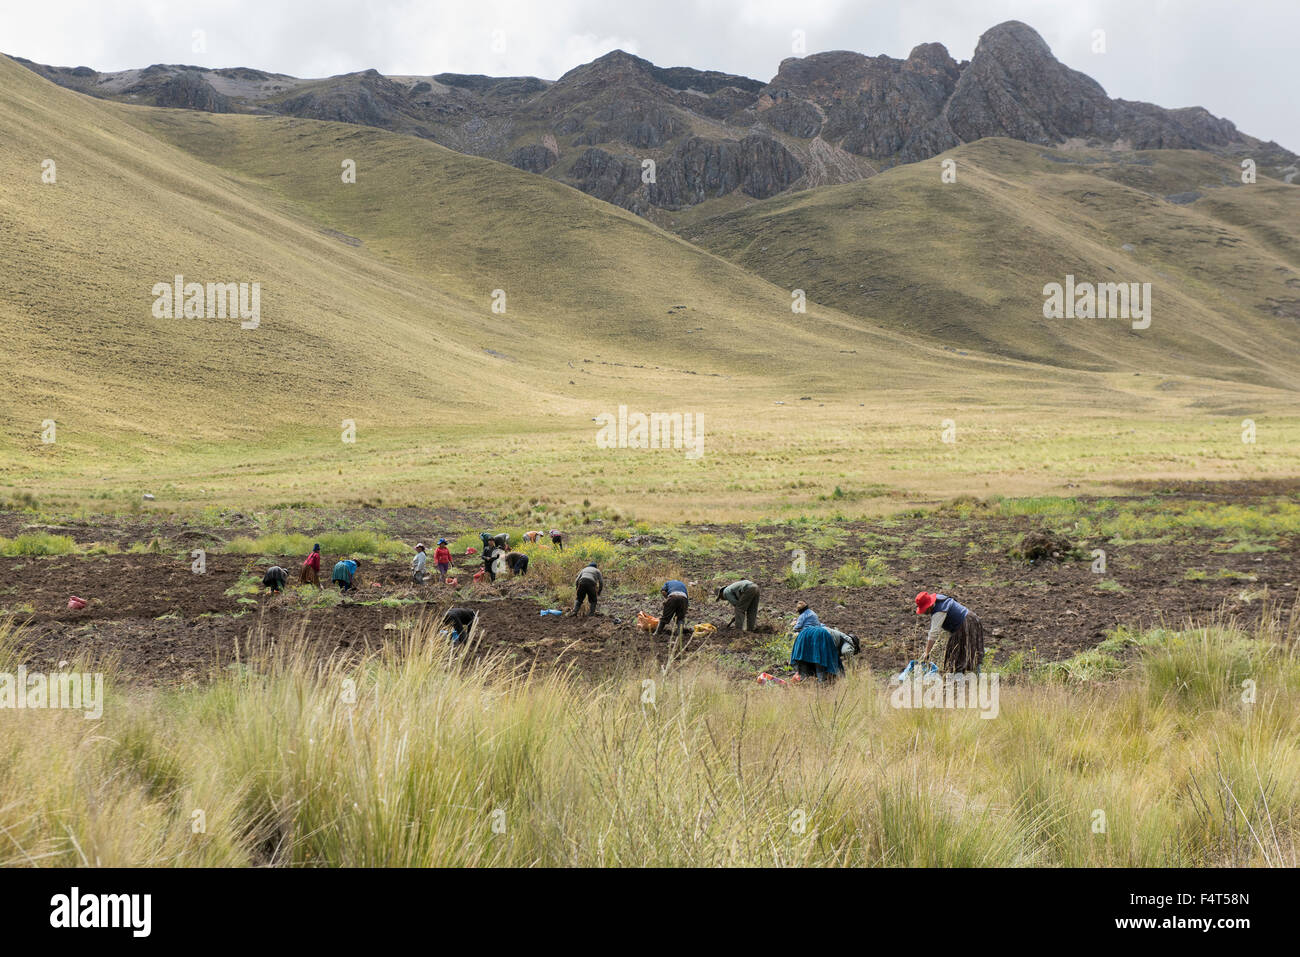 South America, Latin America, Peru, Cuzco, Andes mountains, Altiplano, local indians harvesting potatoes Stock Photo